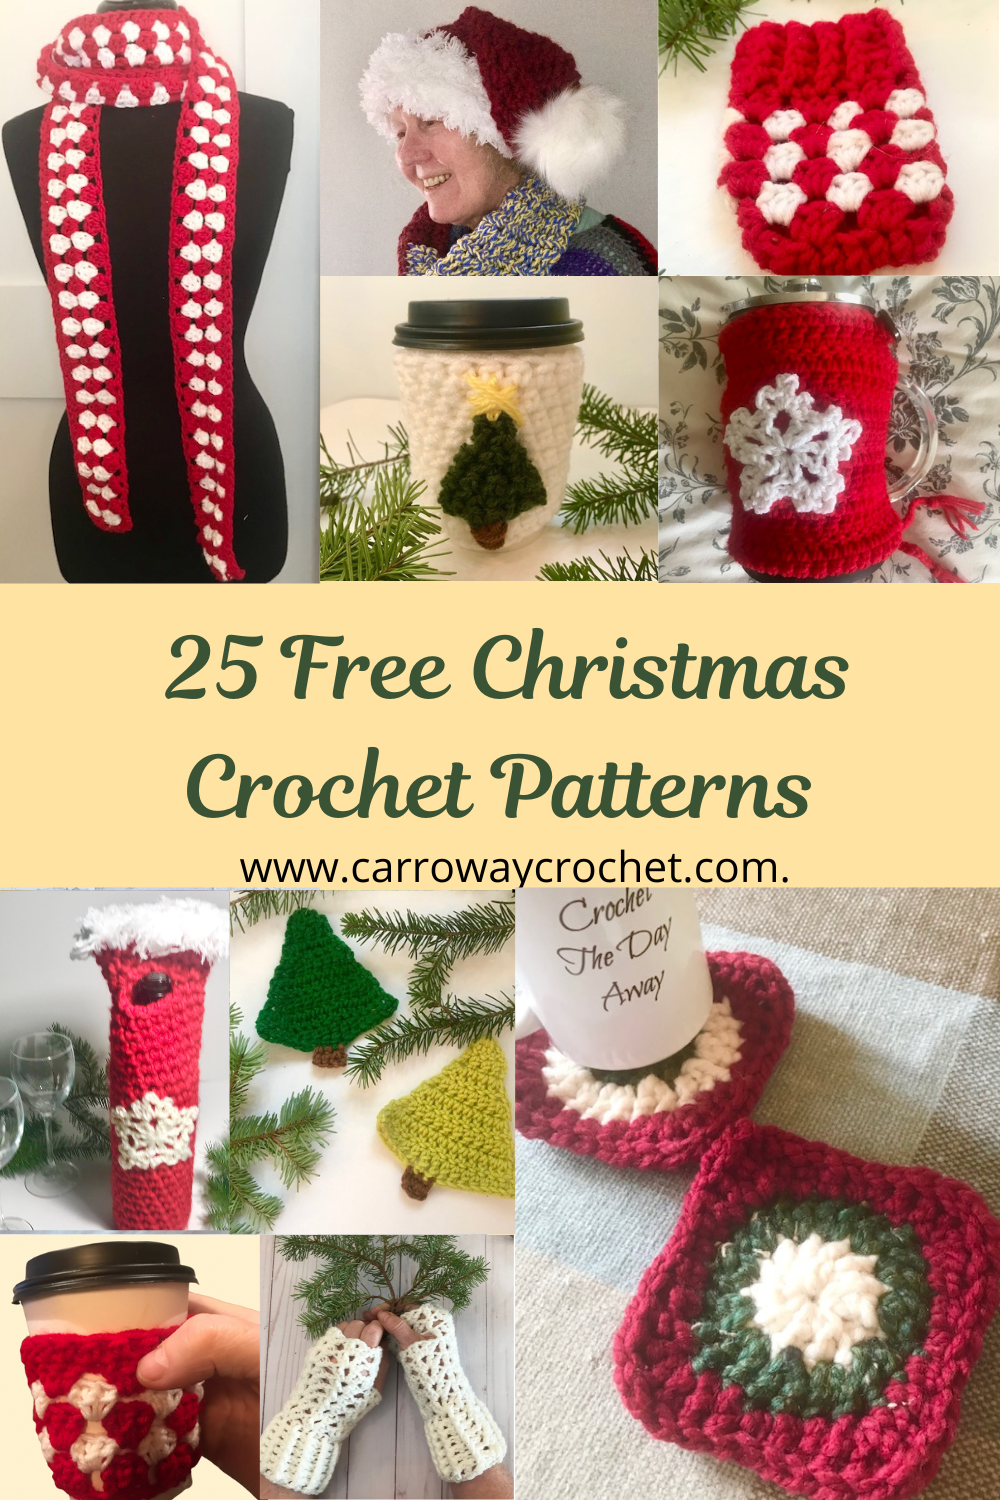 25 Free Christmas Crochet Patterns - Carroway Crochet